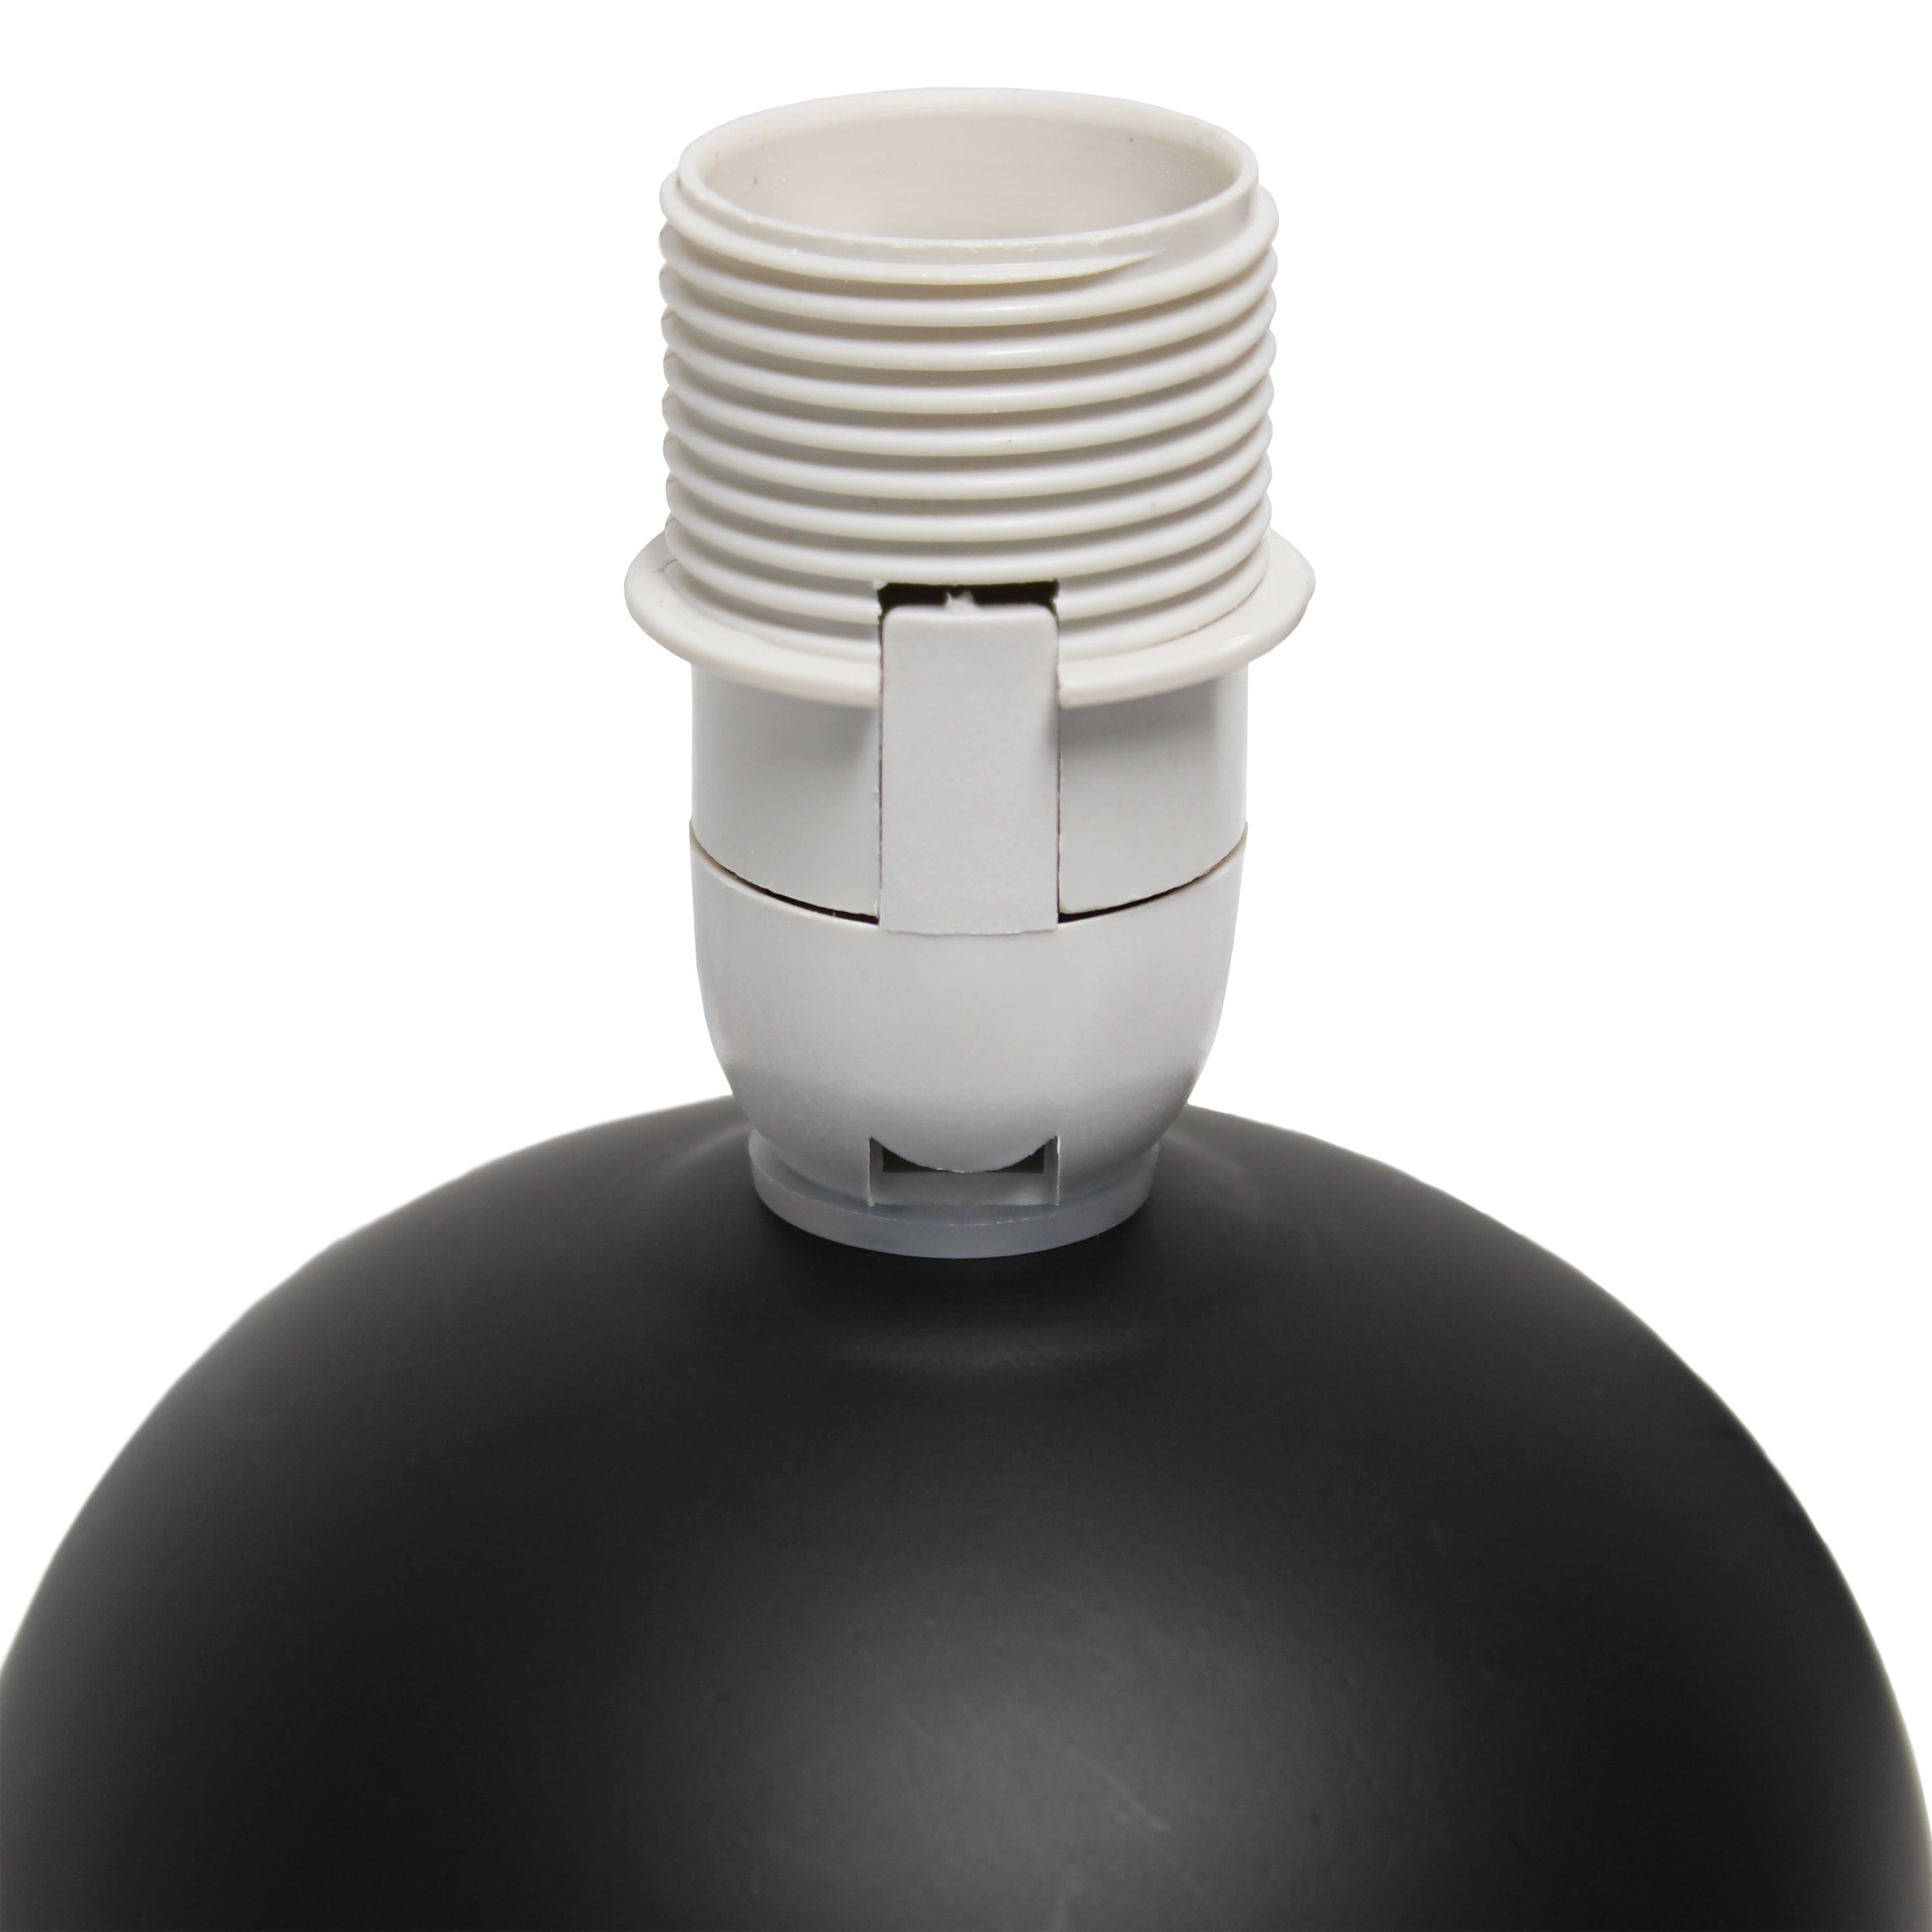 Simple Designs Mini Ceramic Globe Table Lamp, Black ( Light Bulb